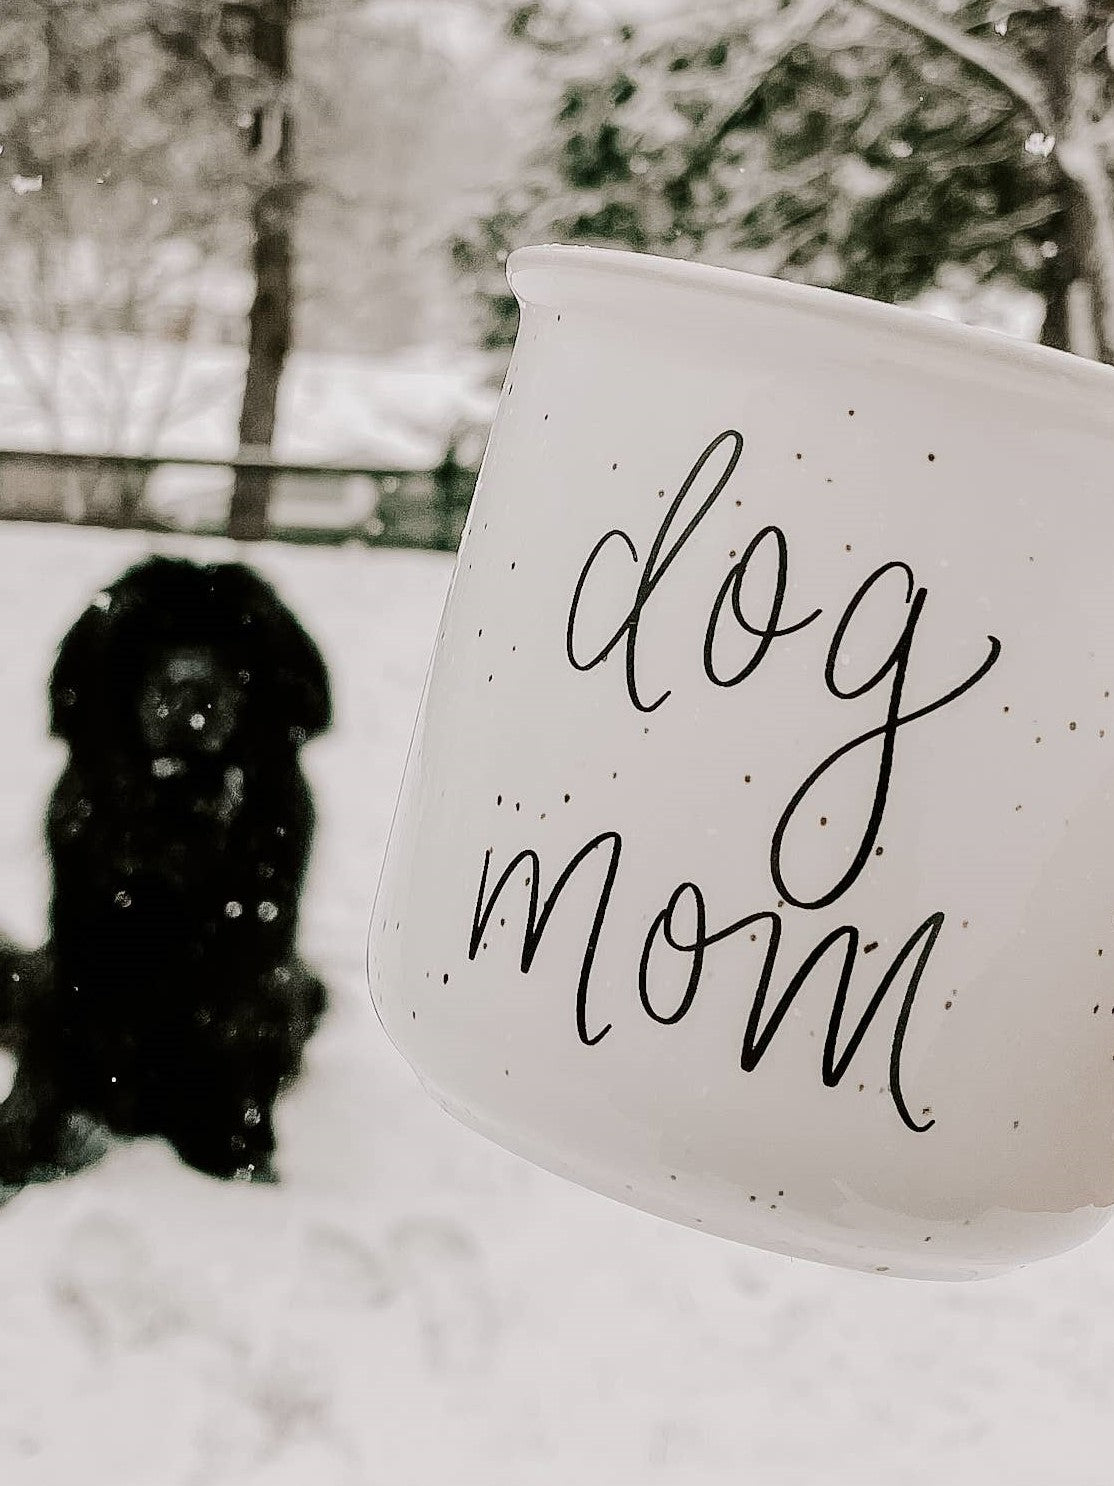 Dog Mom Rustic Coffee Mug